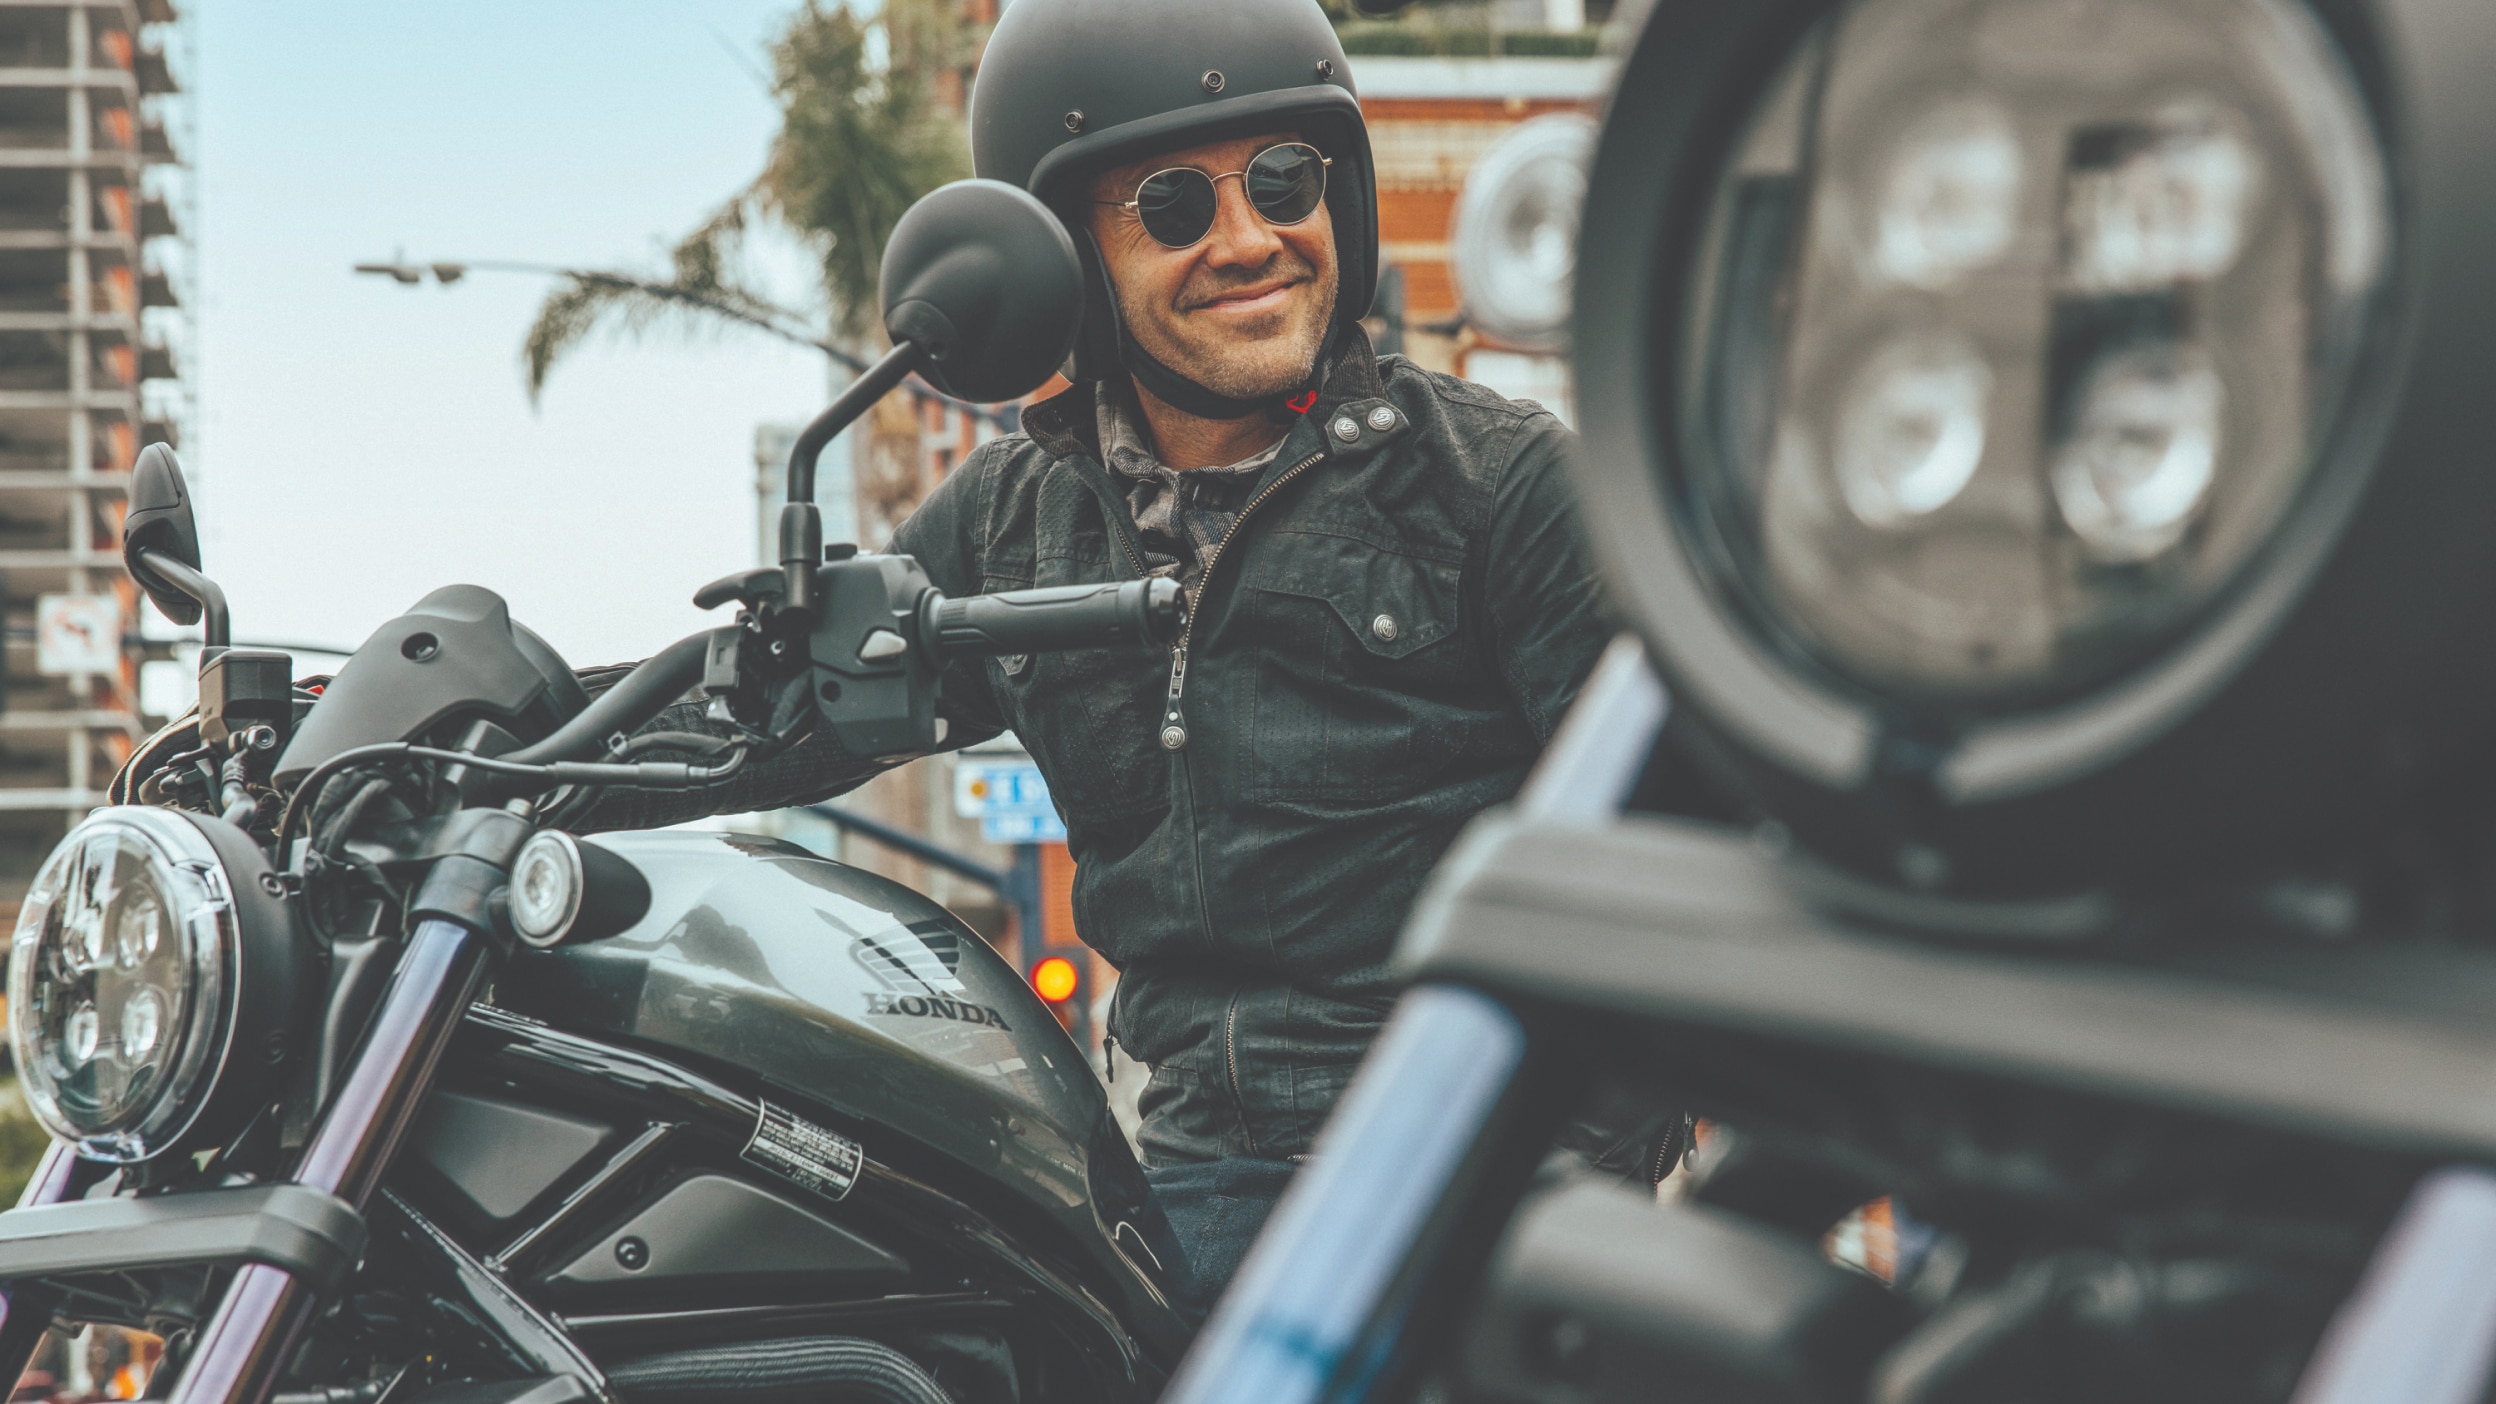 A rider wearing a black helmet smiling on a Honda Rebel 